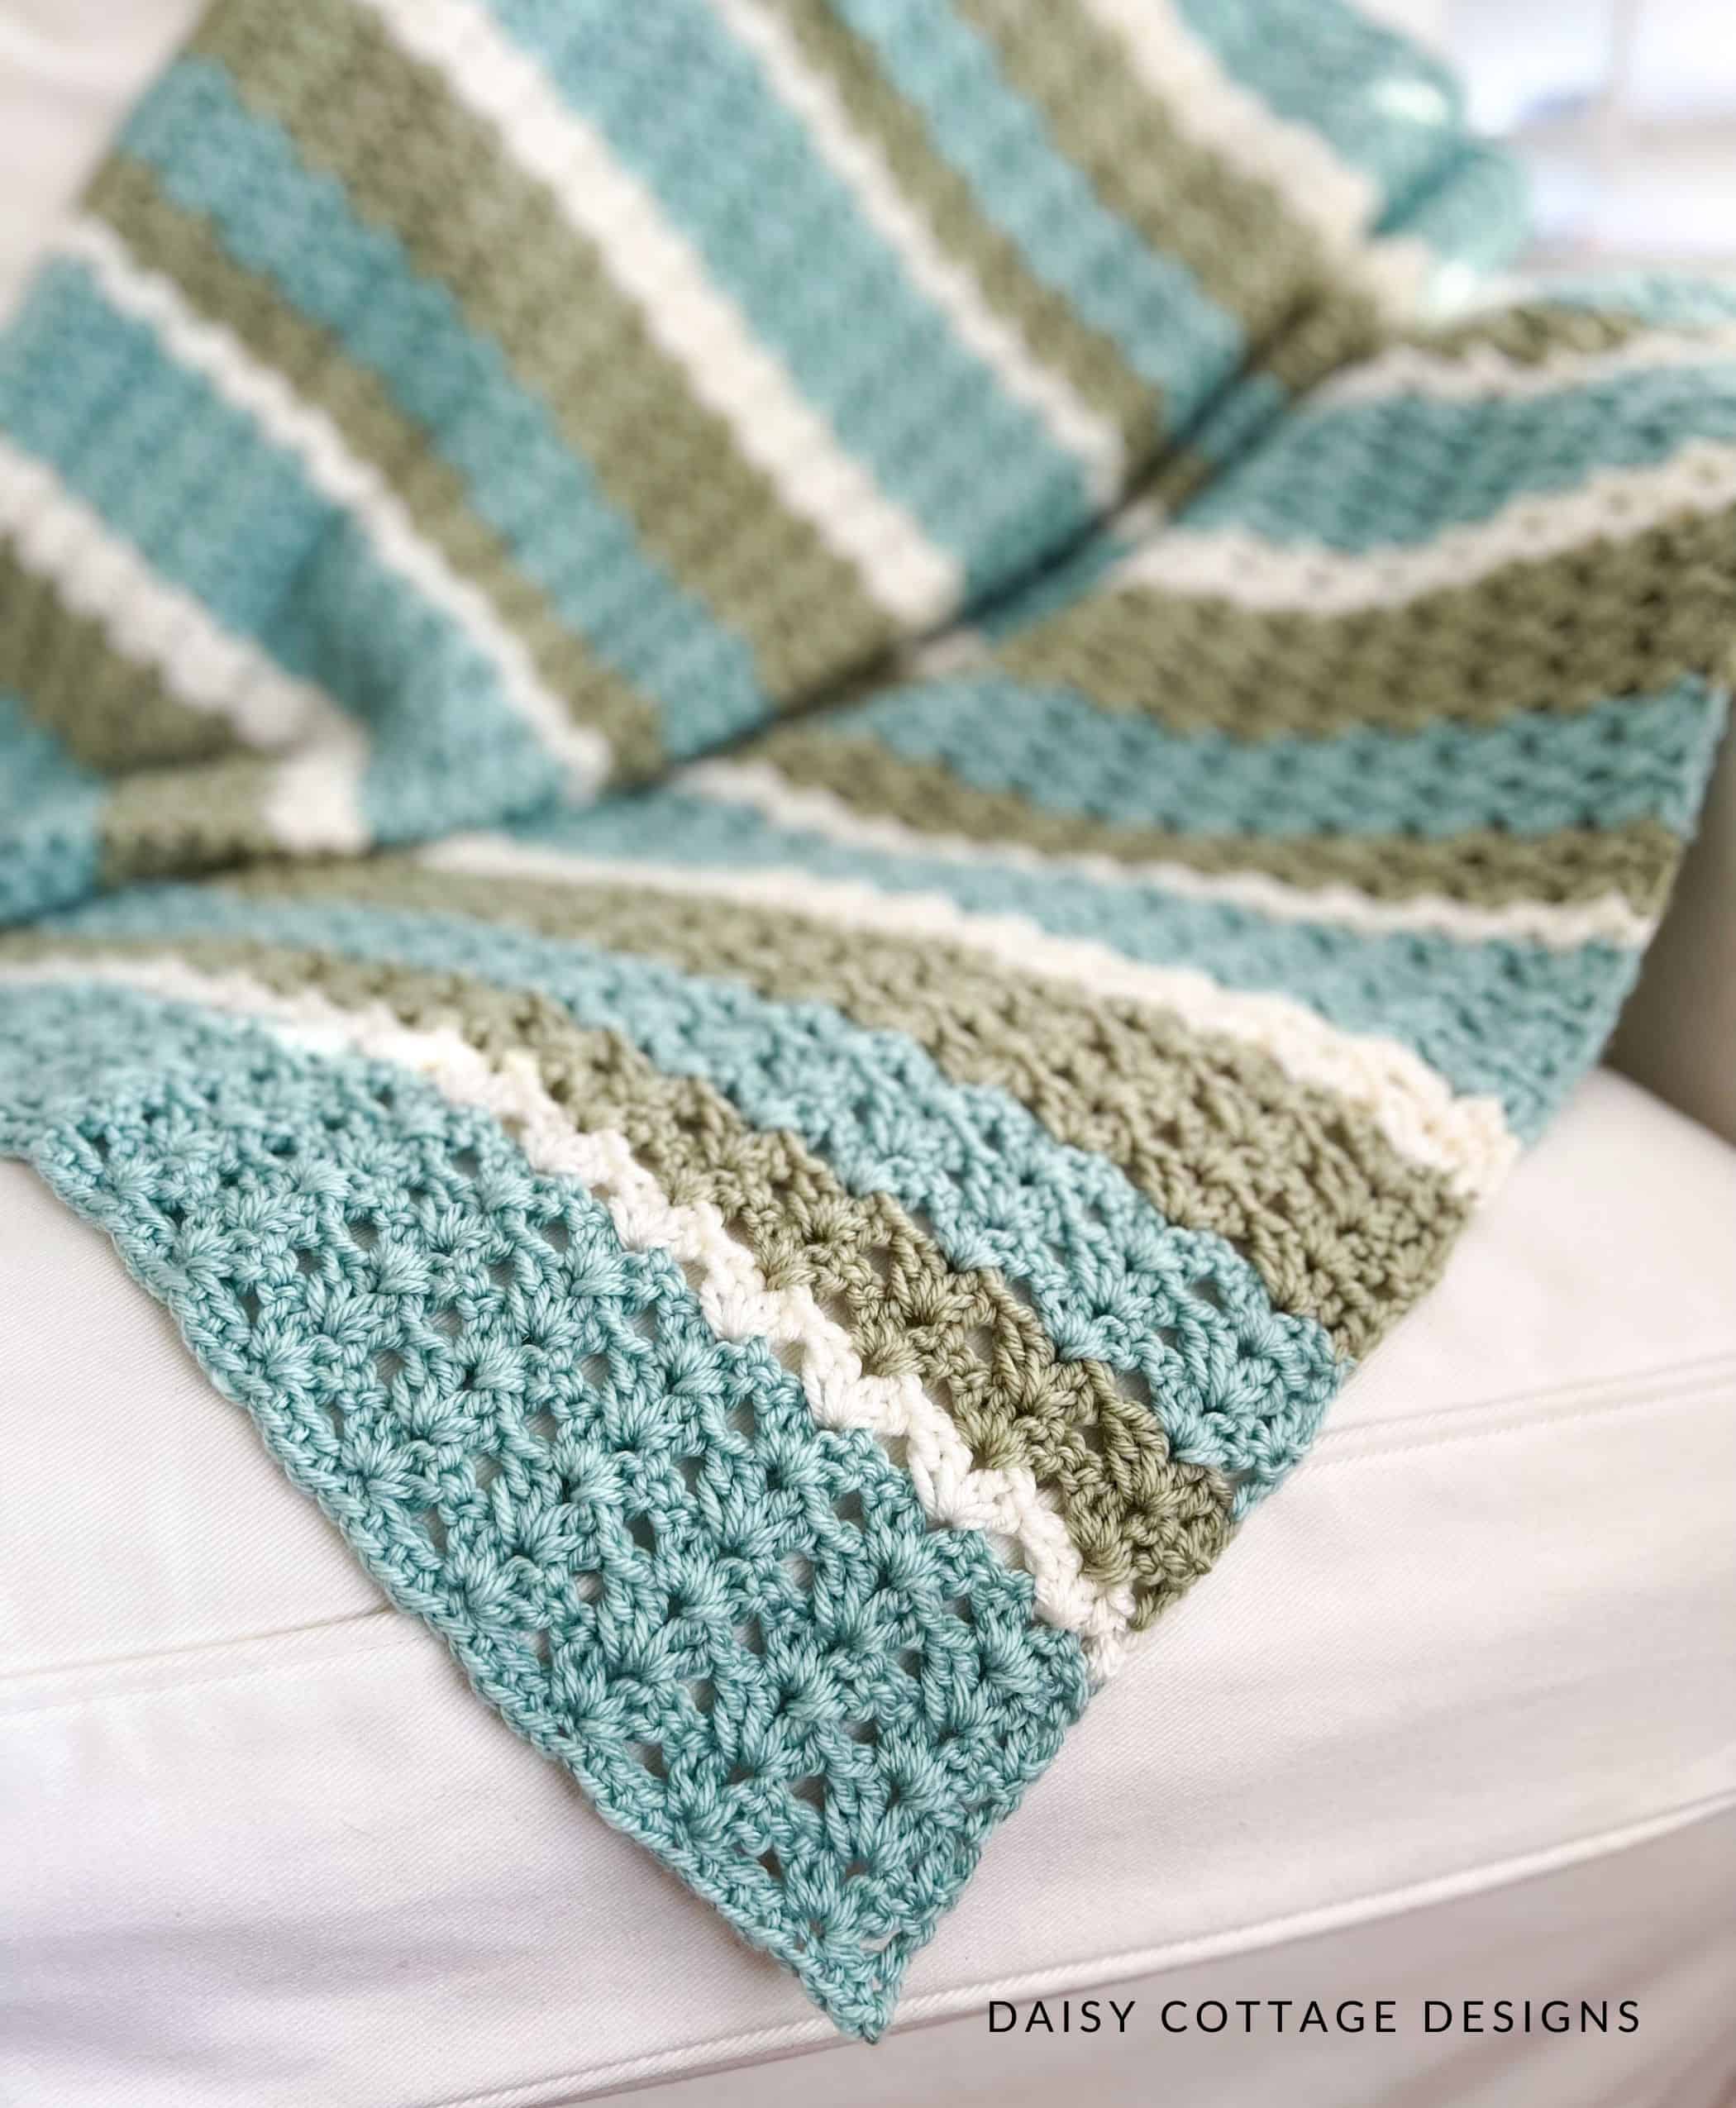 9 Easy Crochet Blanket Patterns (Perfect for Beginners!)